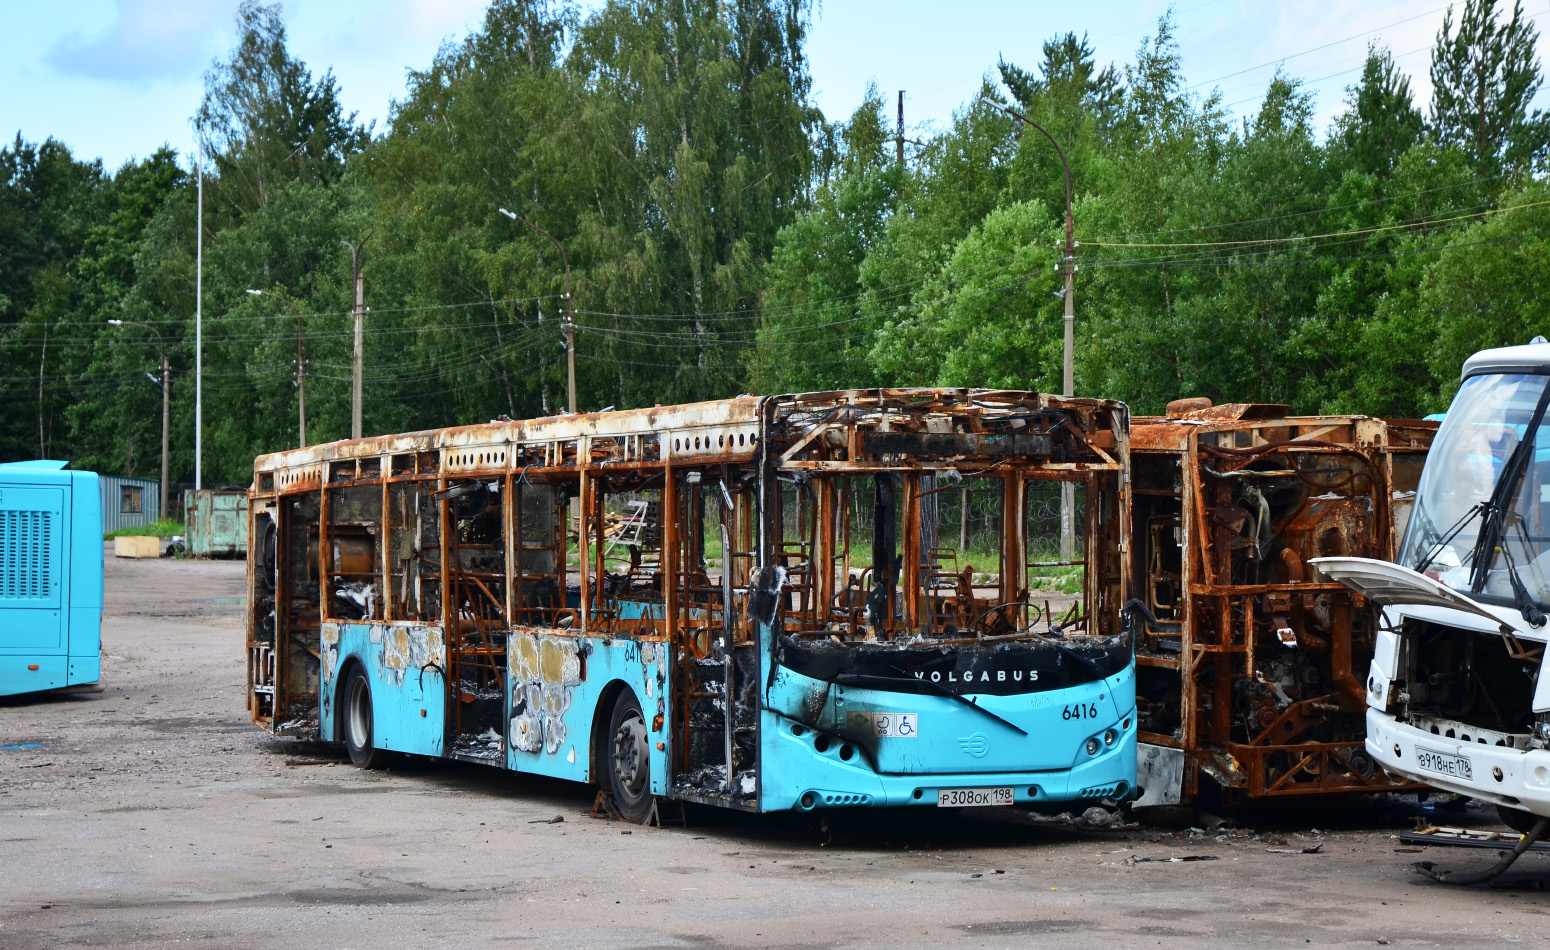 Saint Petersburg, Volgabus-5270.G2 (LNG) # 6416; Saint Petersburg, Volgabus-5270.G2 (LNG) # 6330